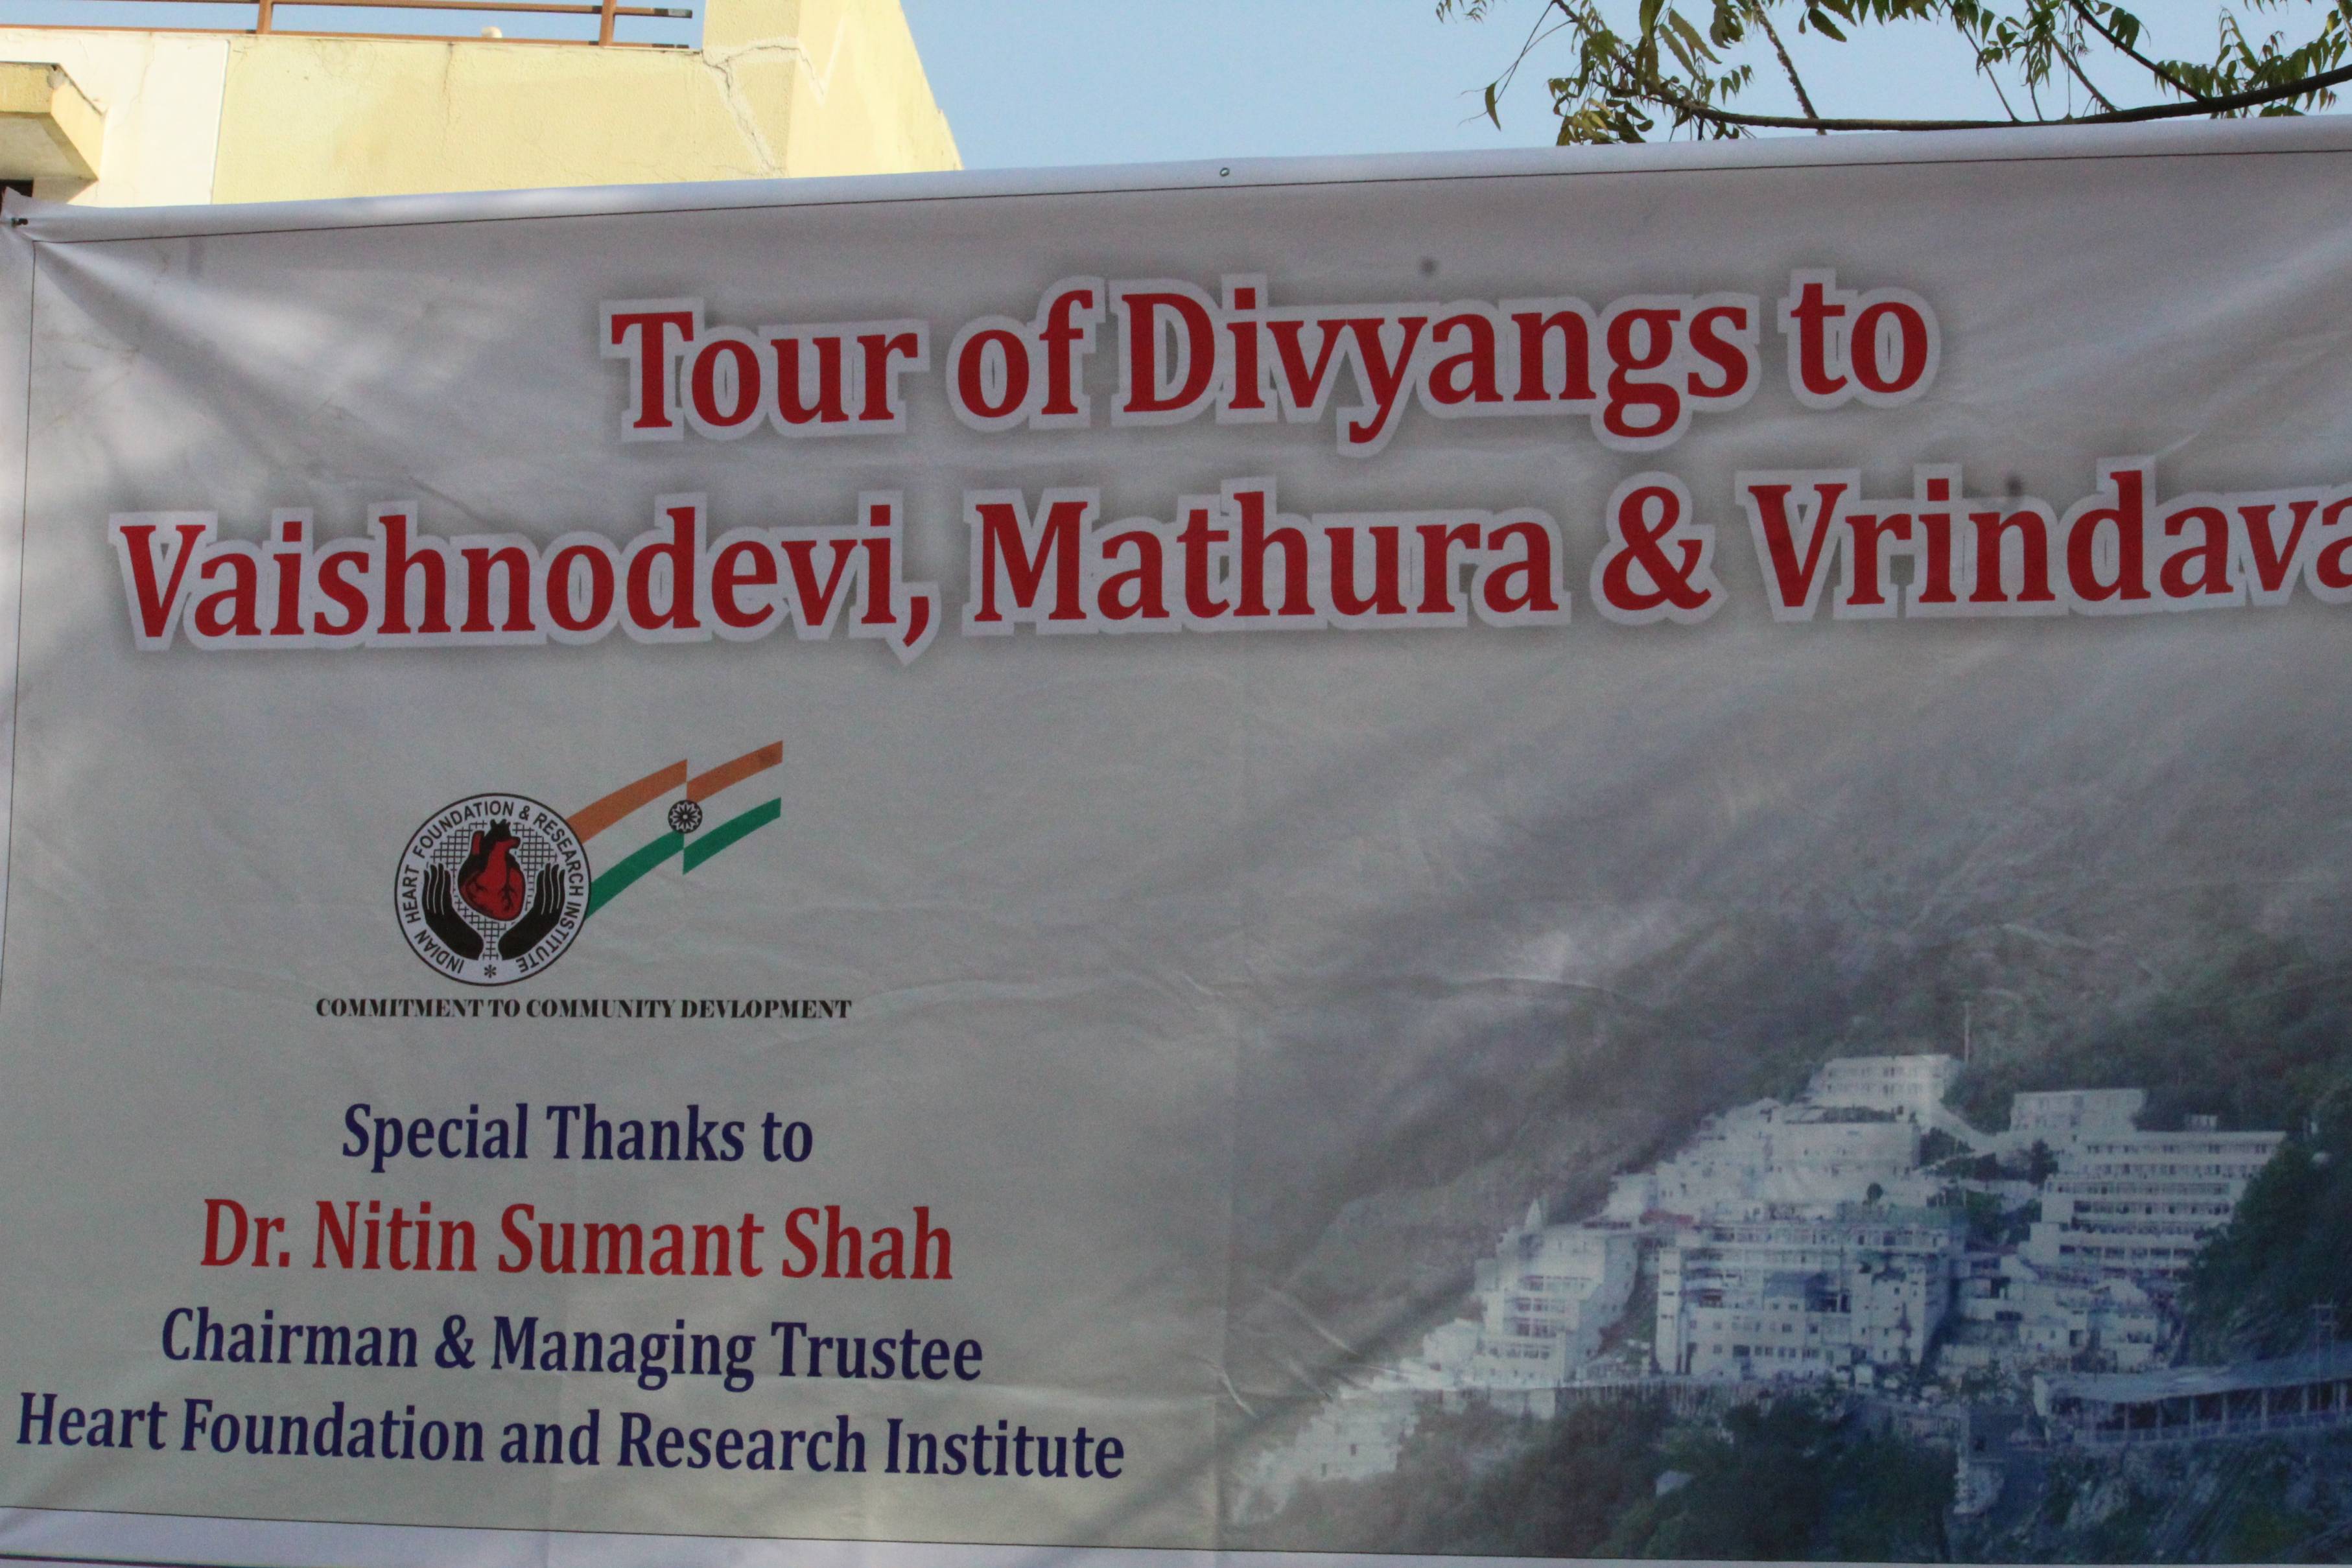 Tour of Divyang to Vaishnodevi, Mathura, Vrindavan